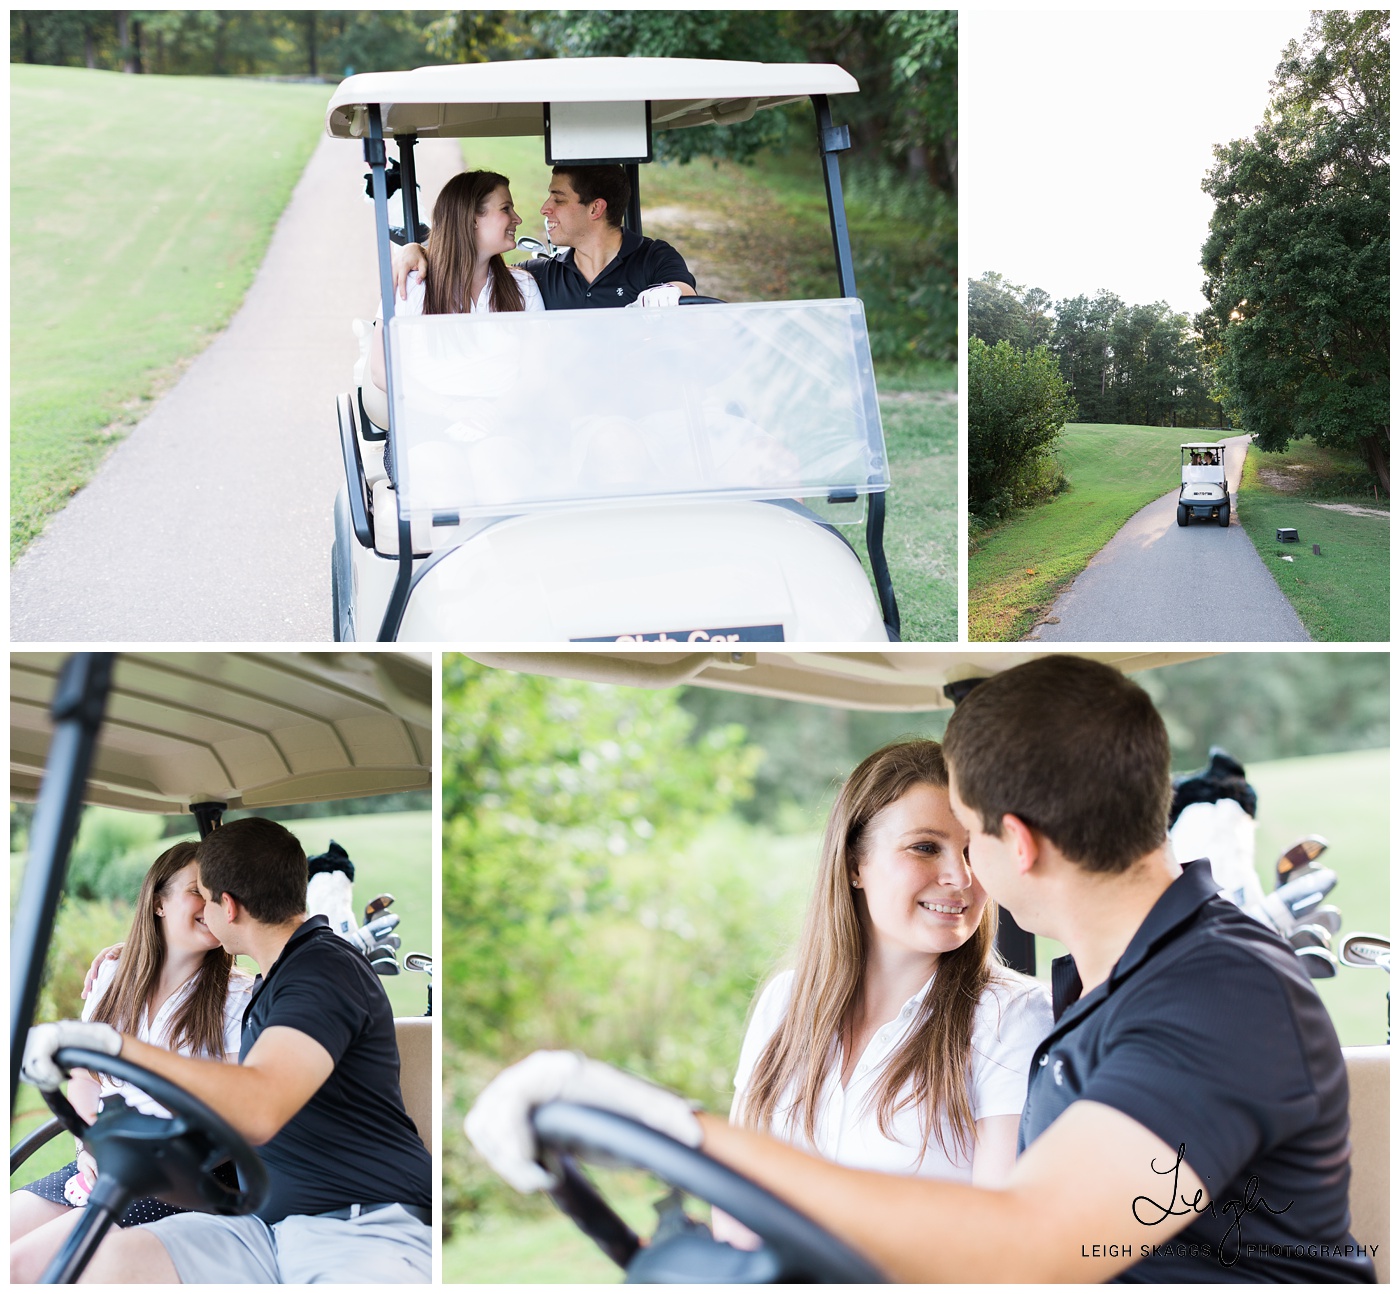 Nicole & Eric | Newport News Golf Club at Deer Run Engagement